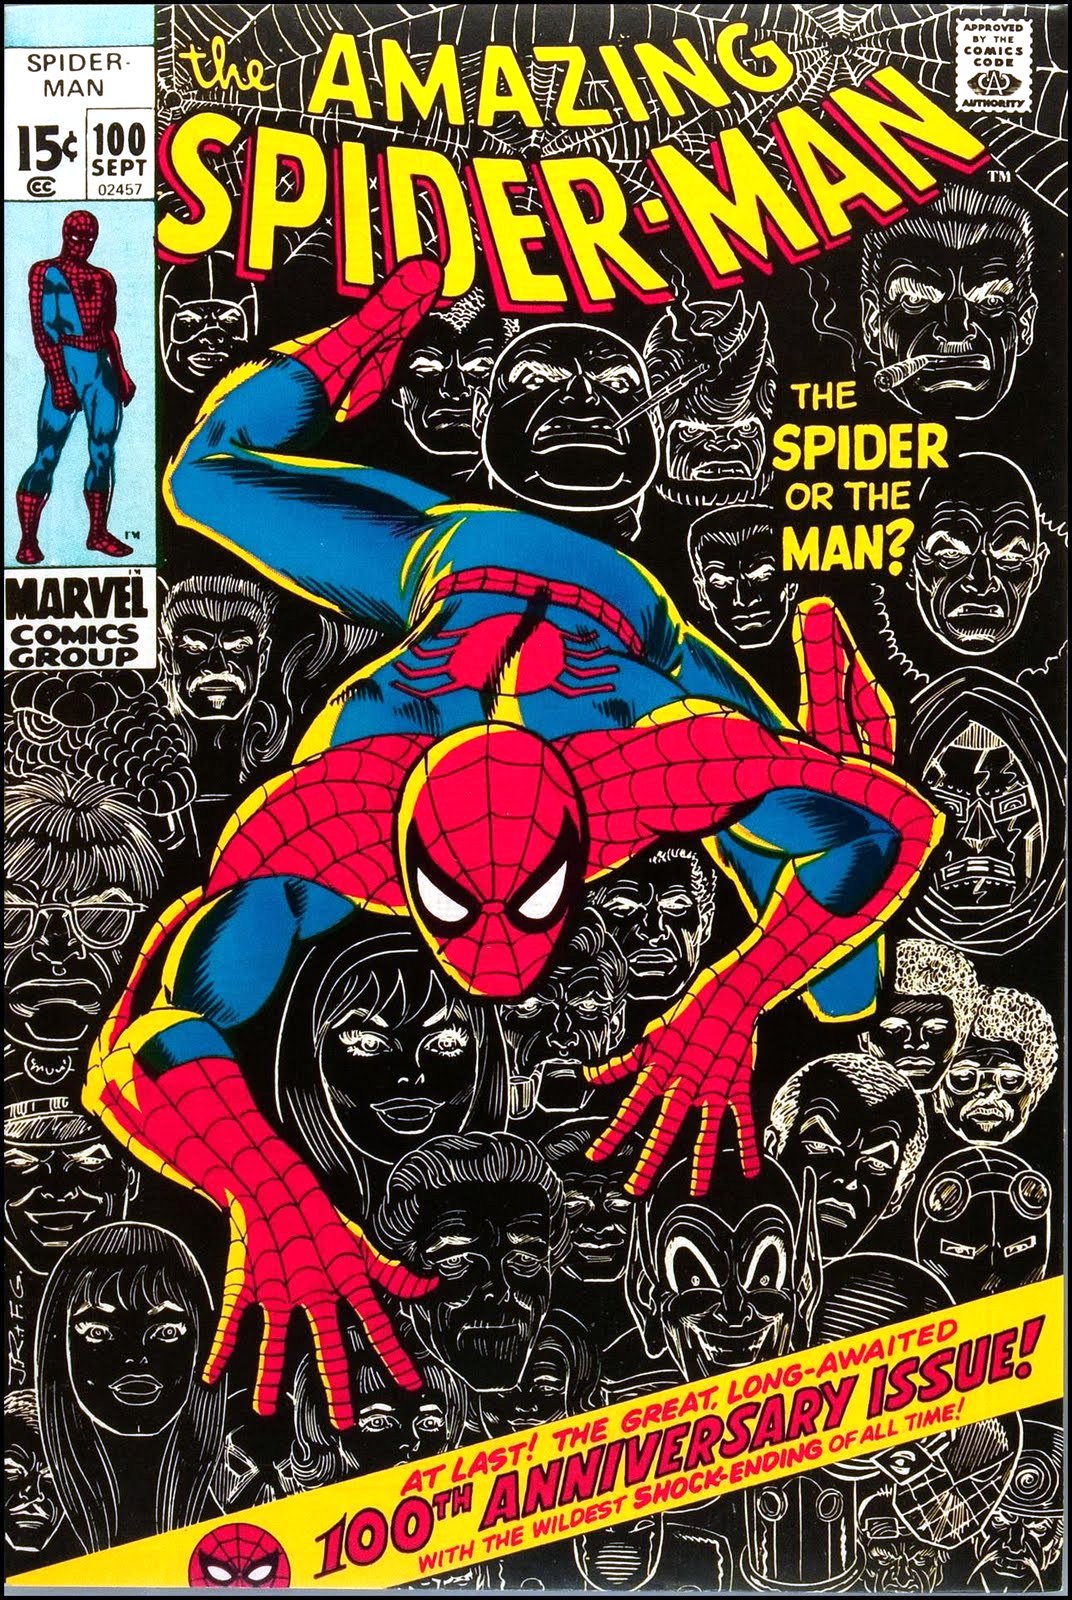 Spider-Man numero 100